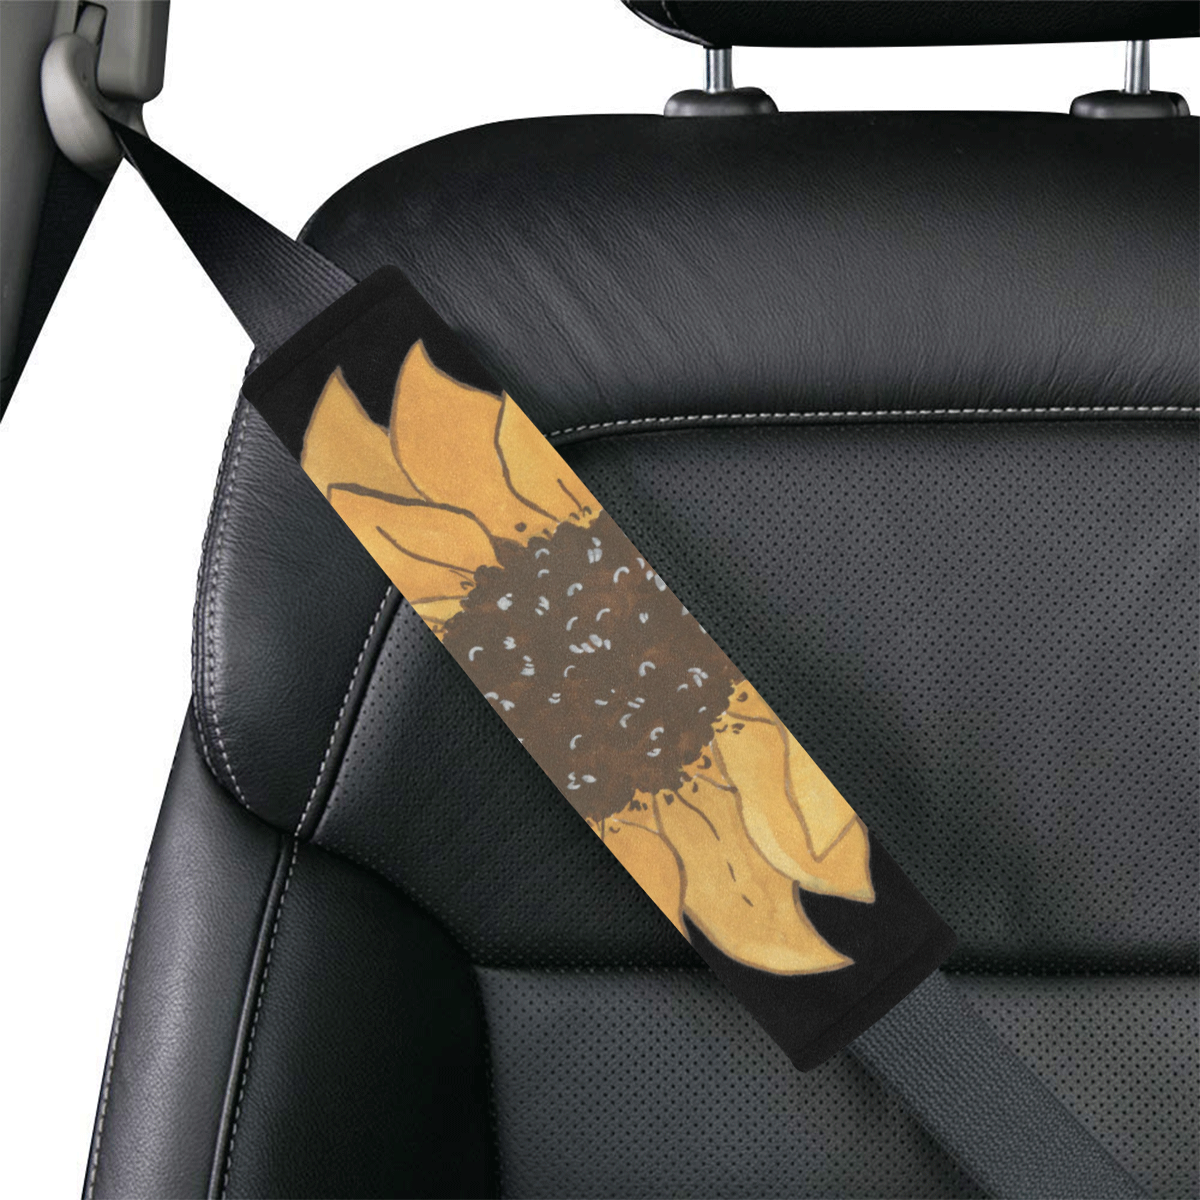 LG Sunflower Car Seat Belt Cover 7''x12.6''